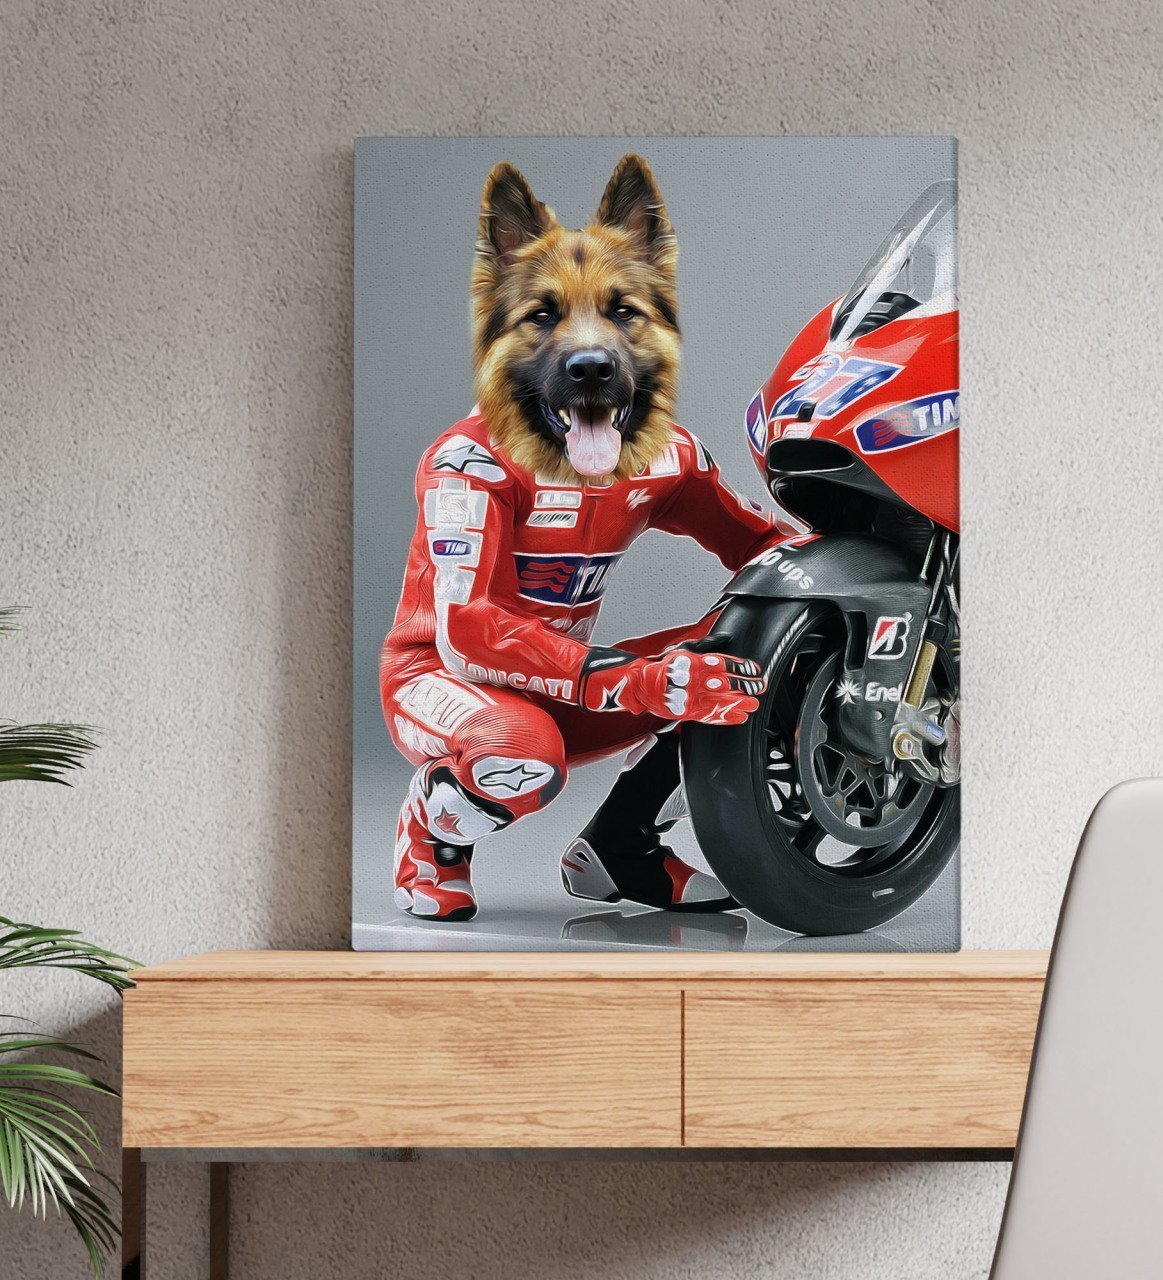 Evcil Dostlara Özel MotoGP Tasarımlı Portre Kanvas Tablo 50x70cm-3